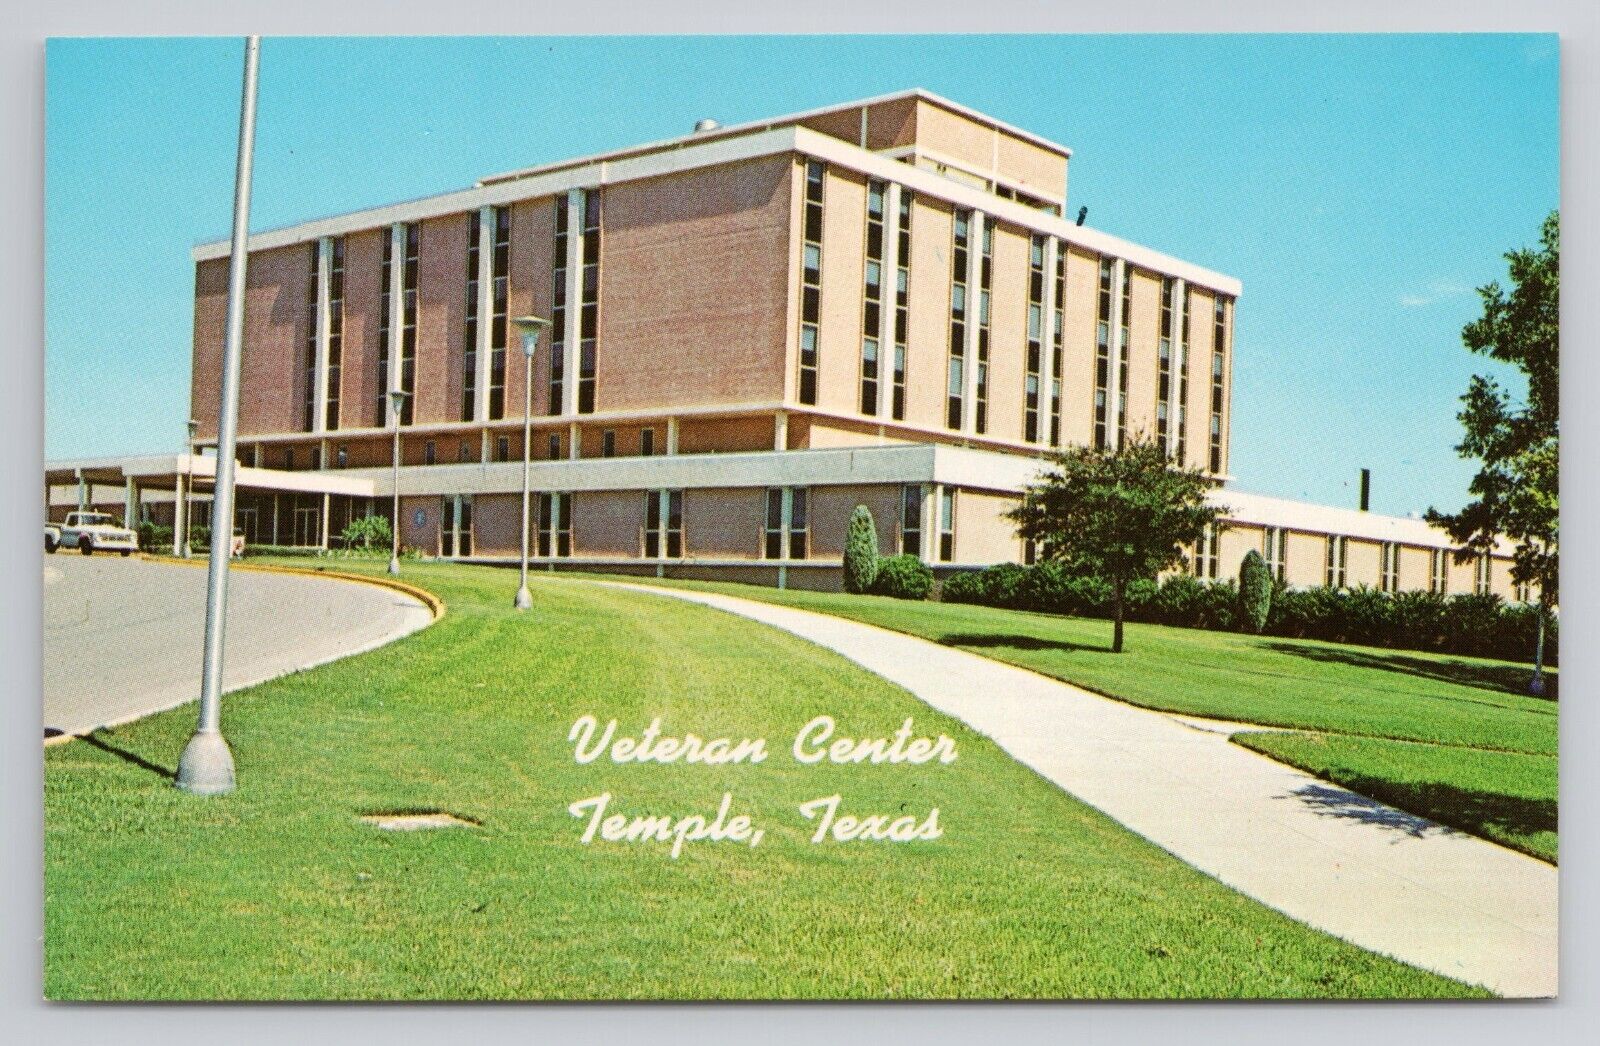 Veteran Center Temple, Texas Chrome Postcard 1111